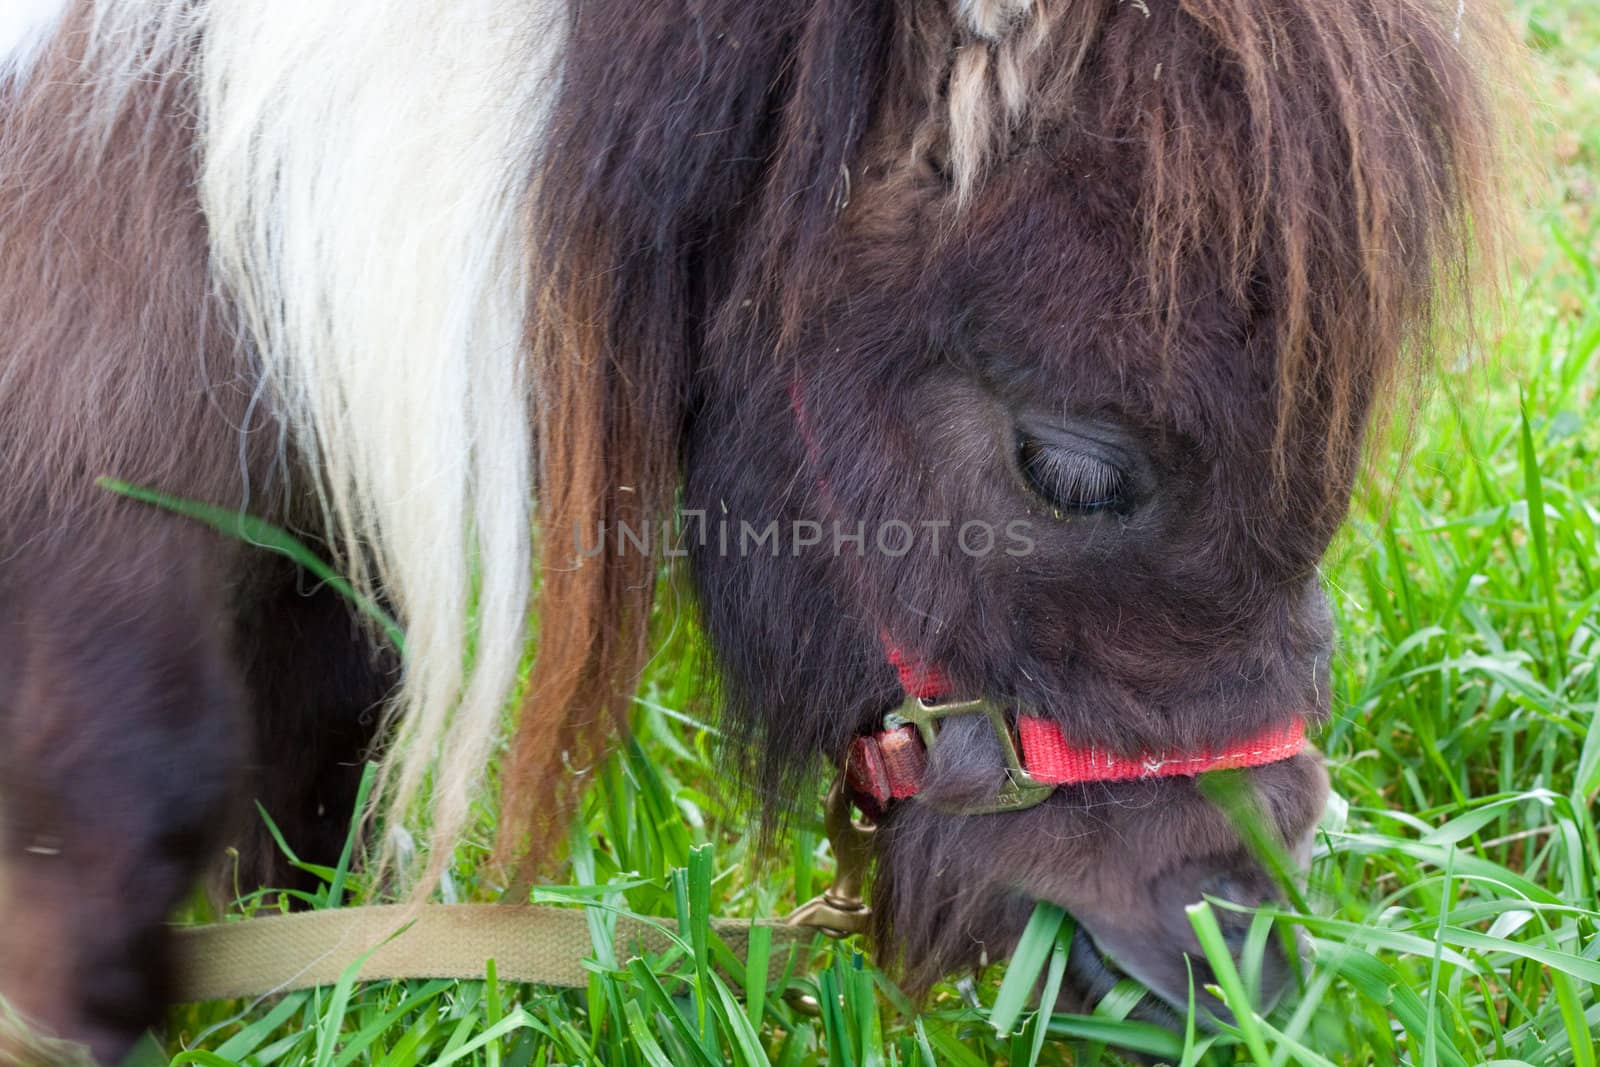 Miniature Dwarf Horse by joshuaraineyphotography